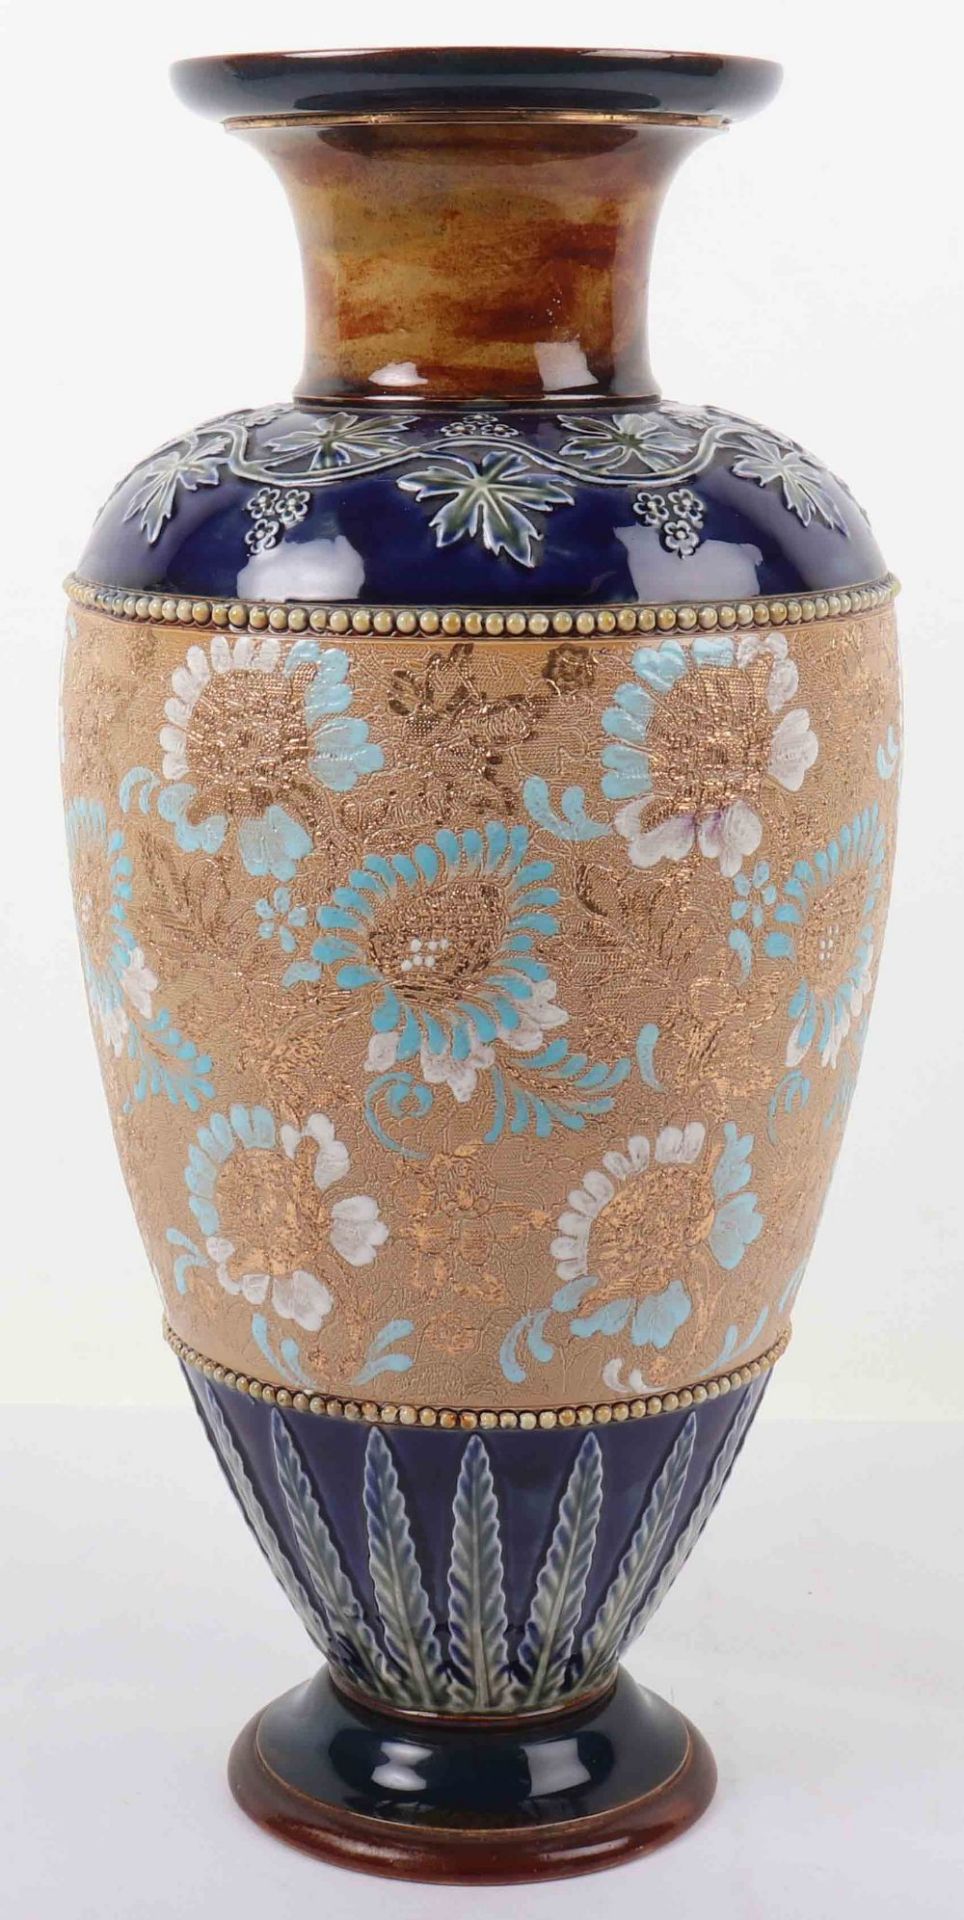 A Royal Doulton Slaters Patent vase